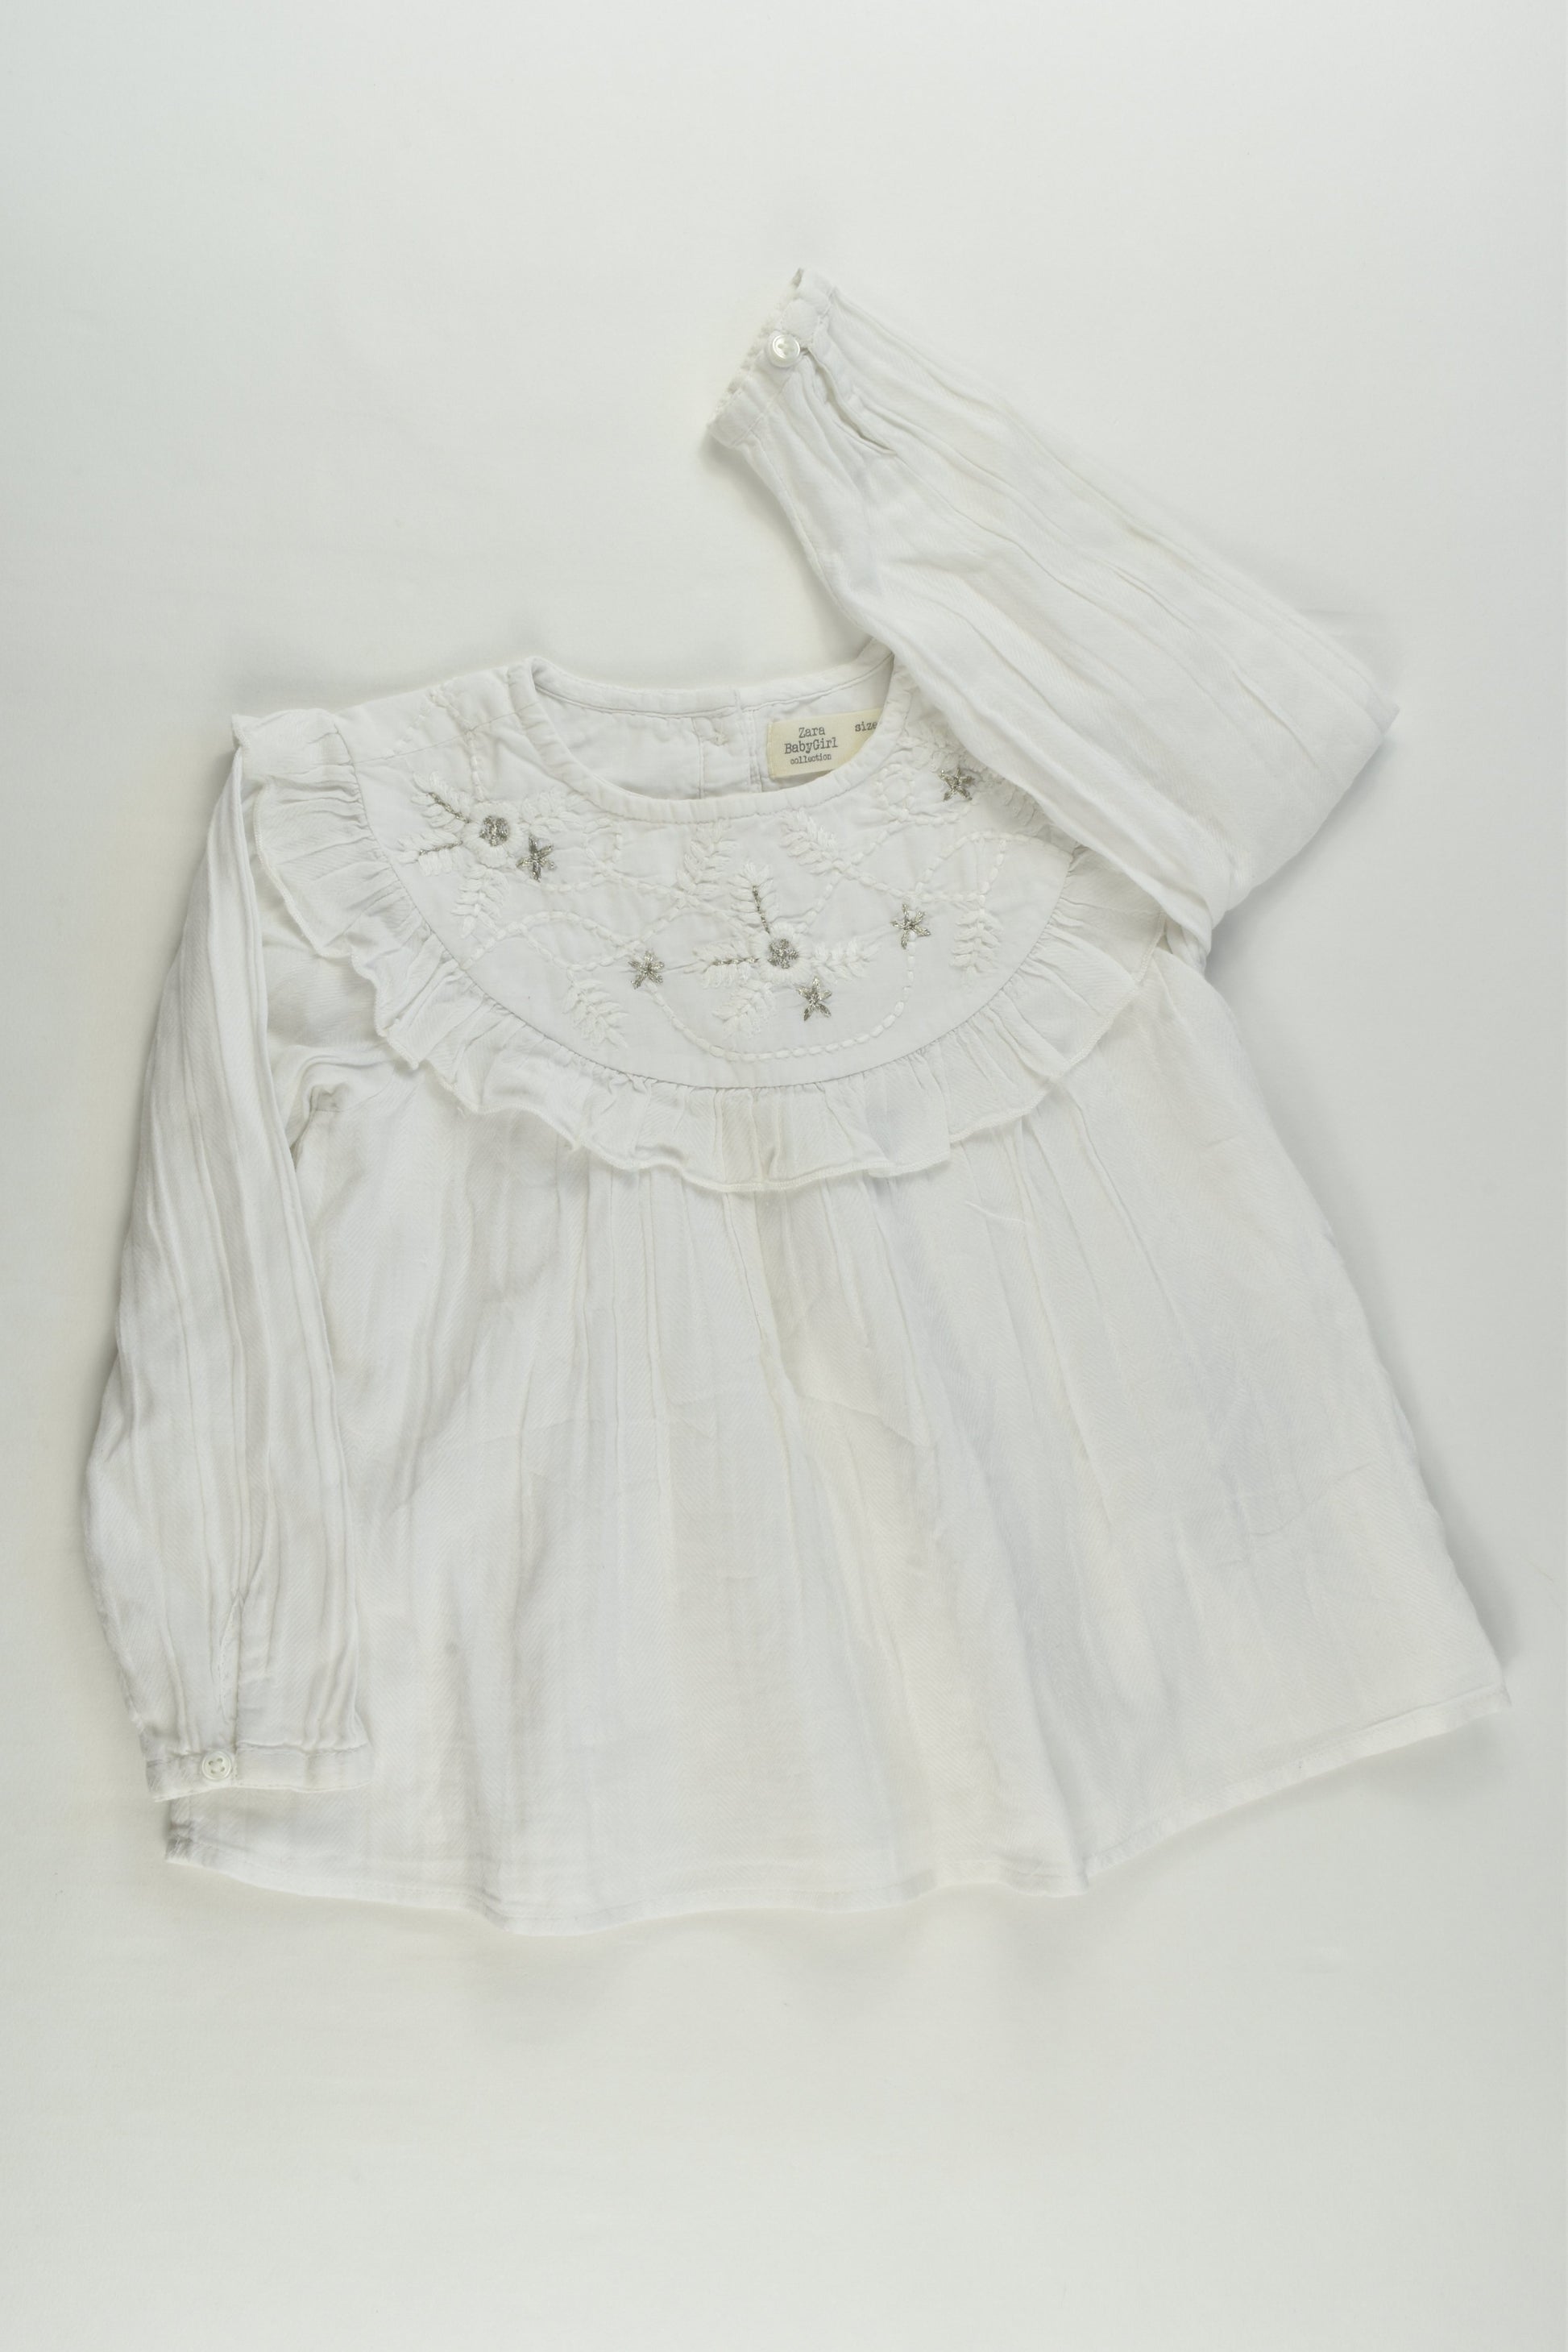 Zara Size 2/3 (98 cm) Lined Blouse